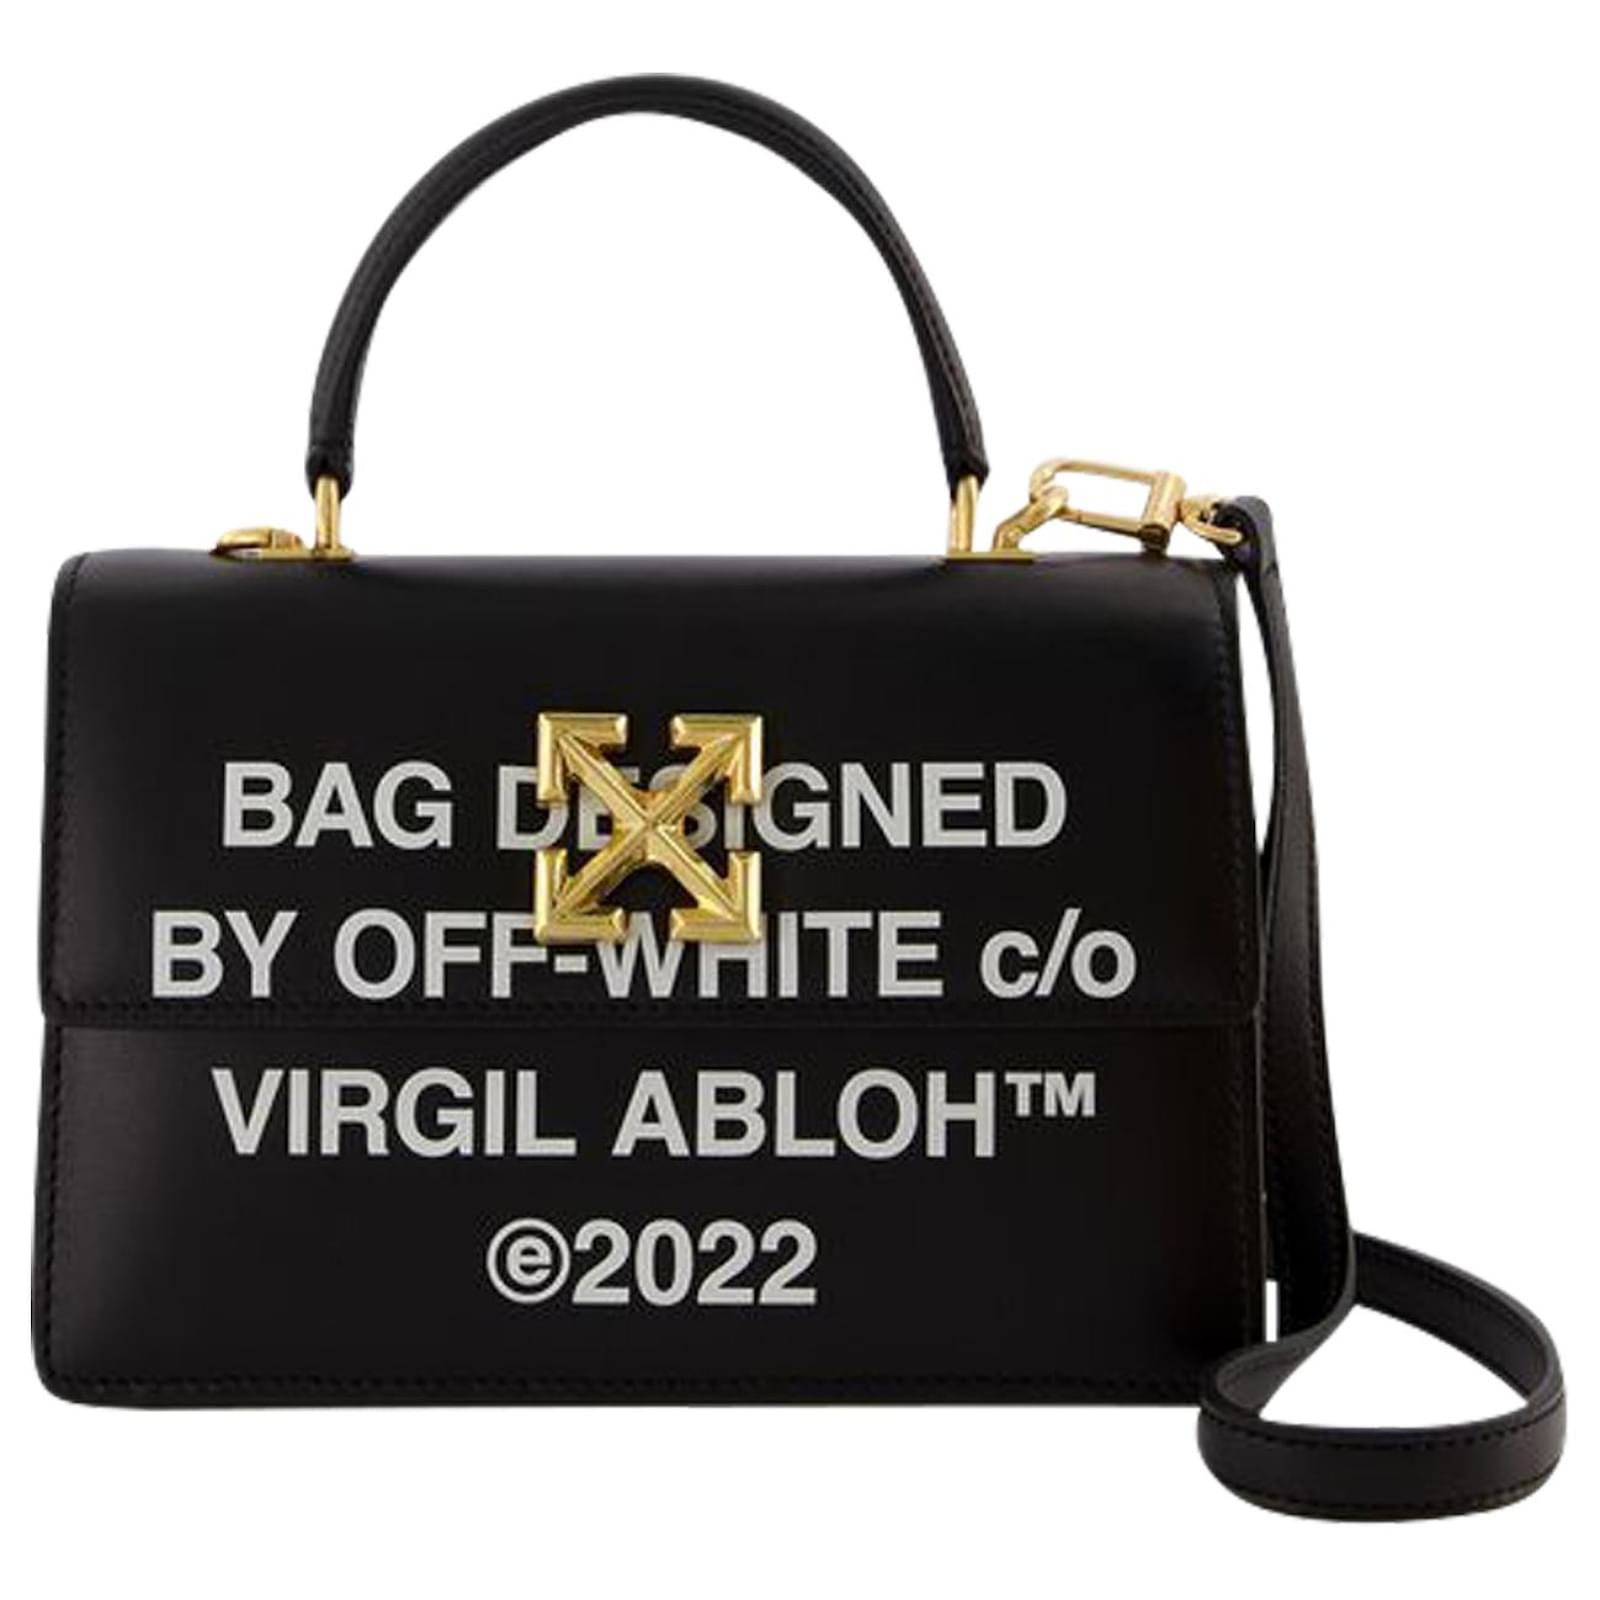 Women's Jitney 1.4 Handbag by Off-white